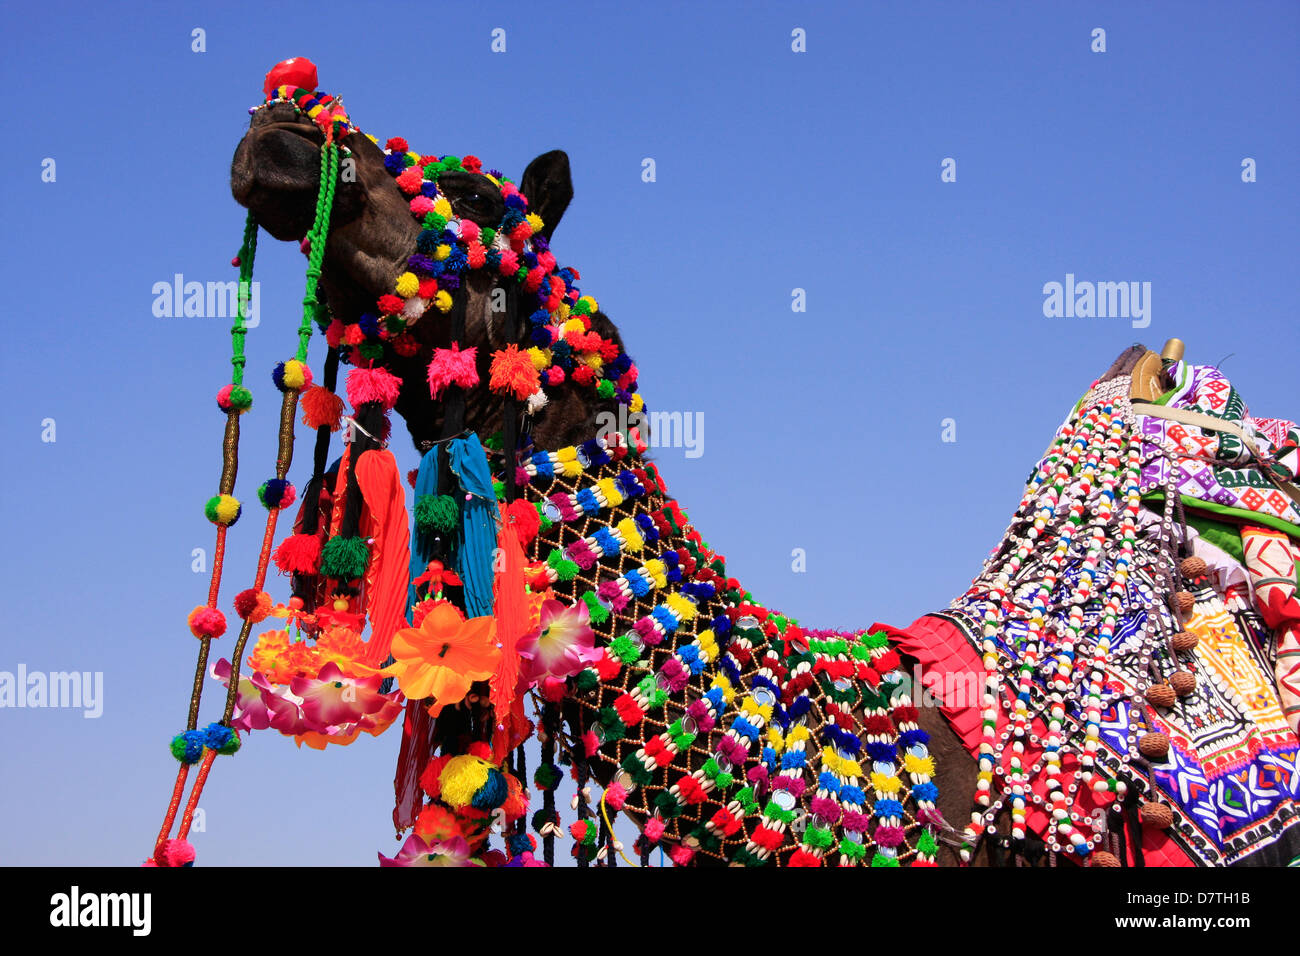 Portrait of decorated camel, Jaisalmer, Rajasthan, India Stock Photo